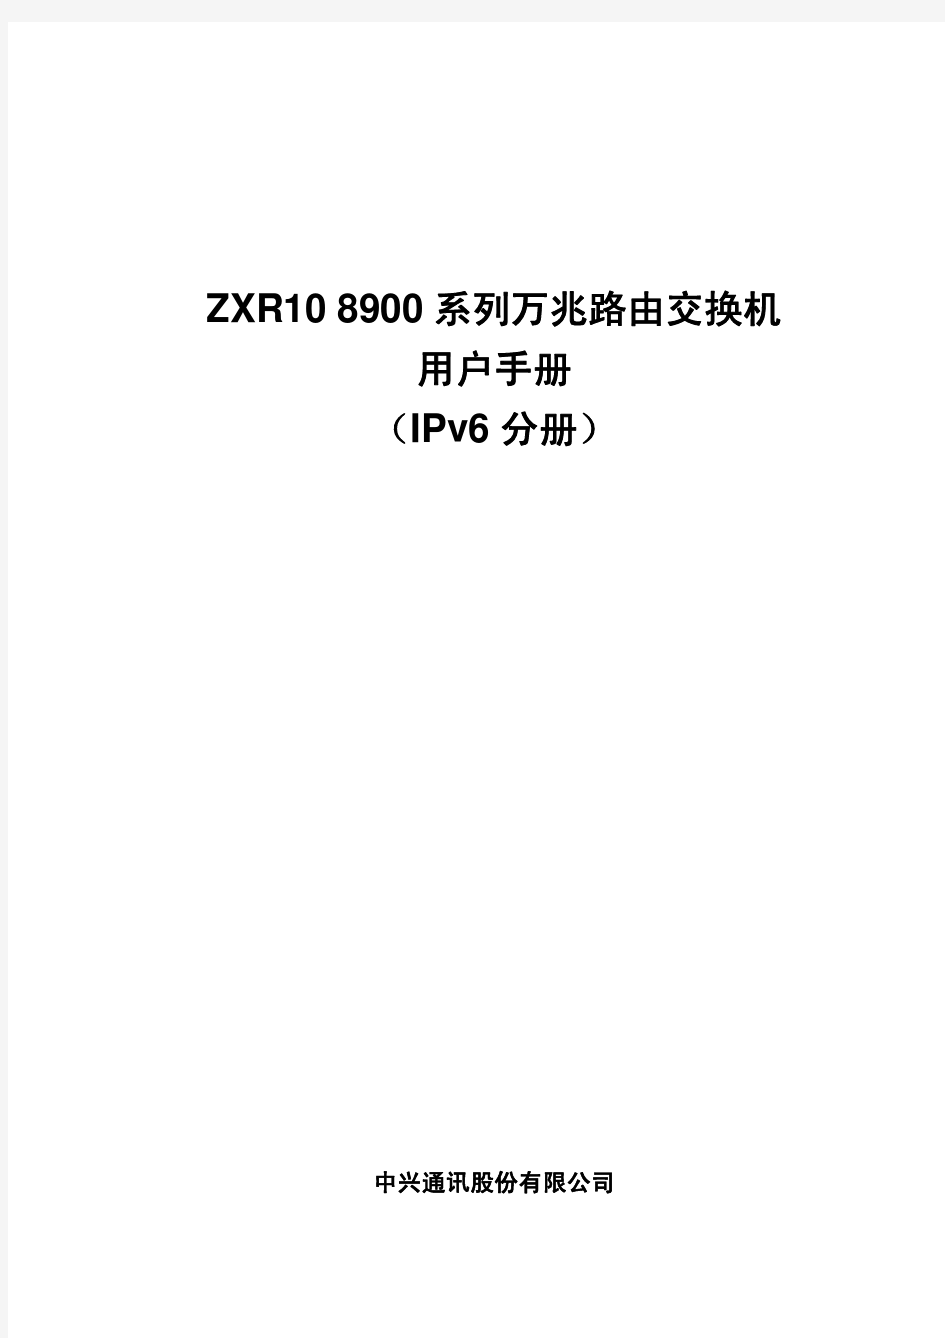 ZXR10 8900系列(V2.8.01C)万兆路由交换机用户手册(IPv6分册)